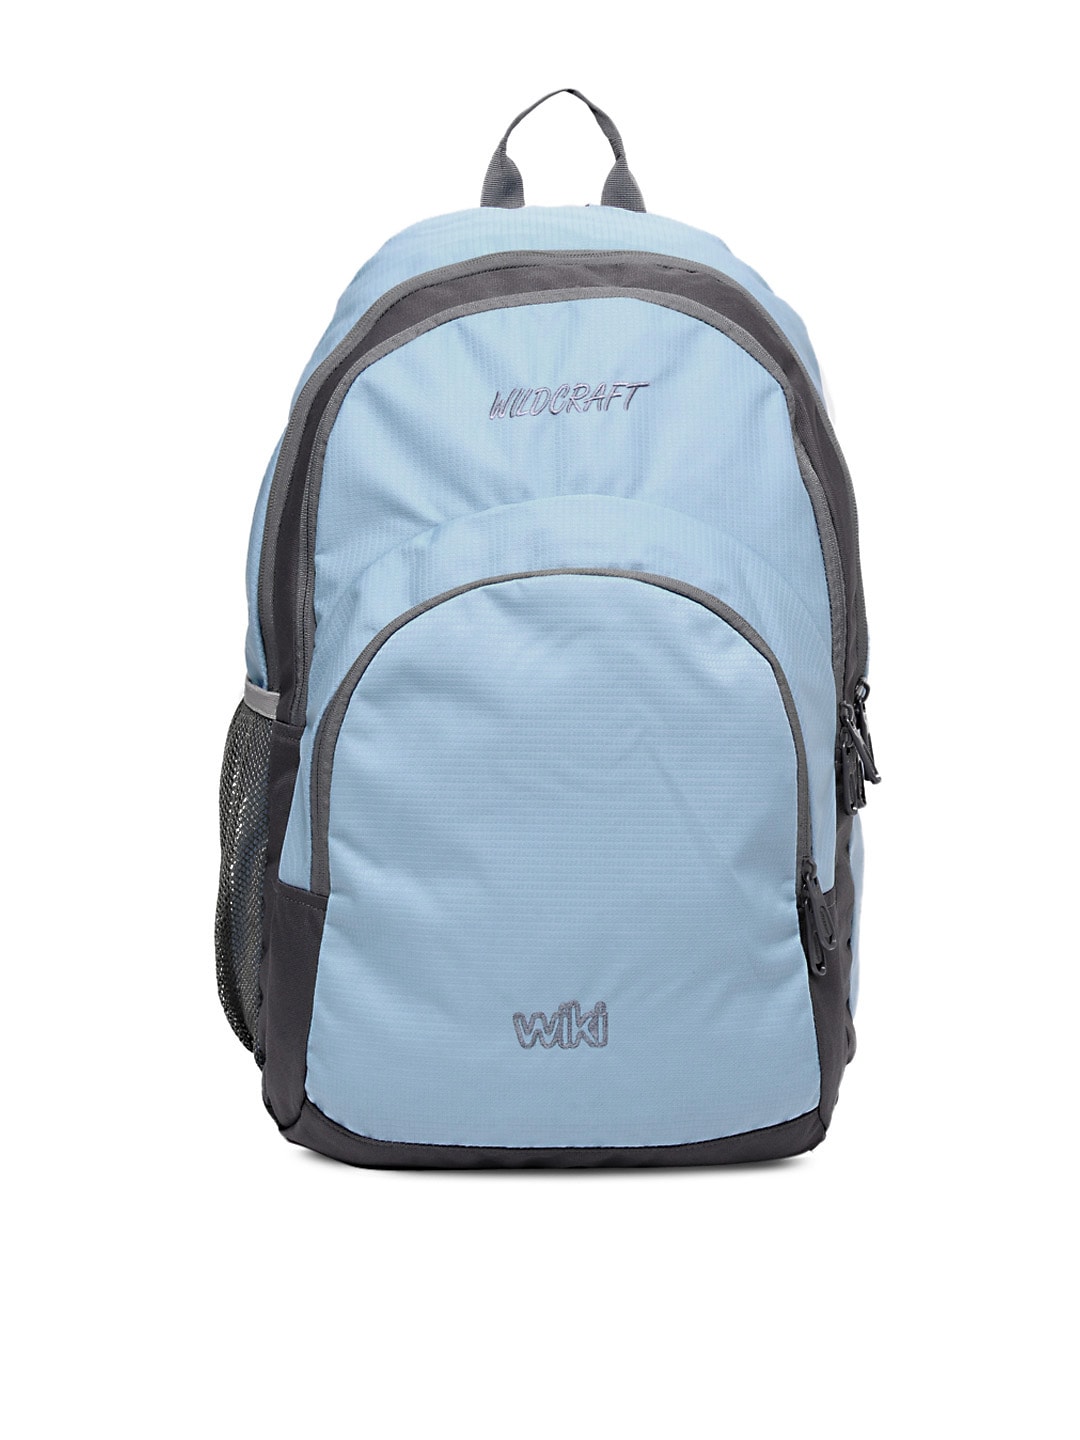 Wildcraft Unisex Blue & Grey Backpack